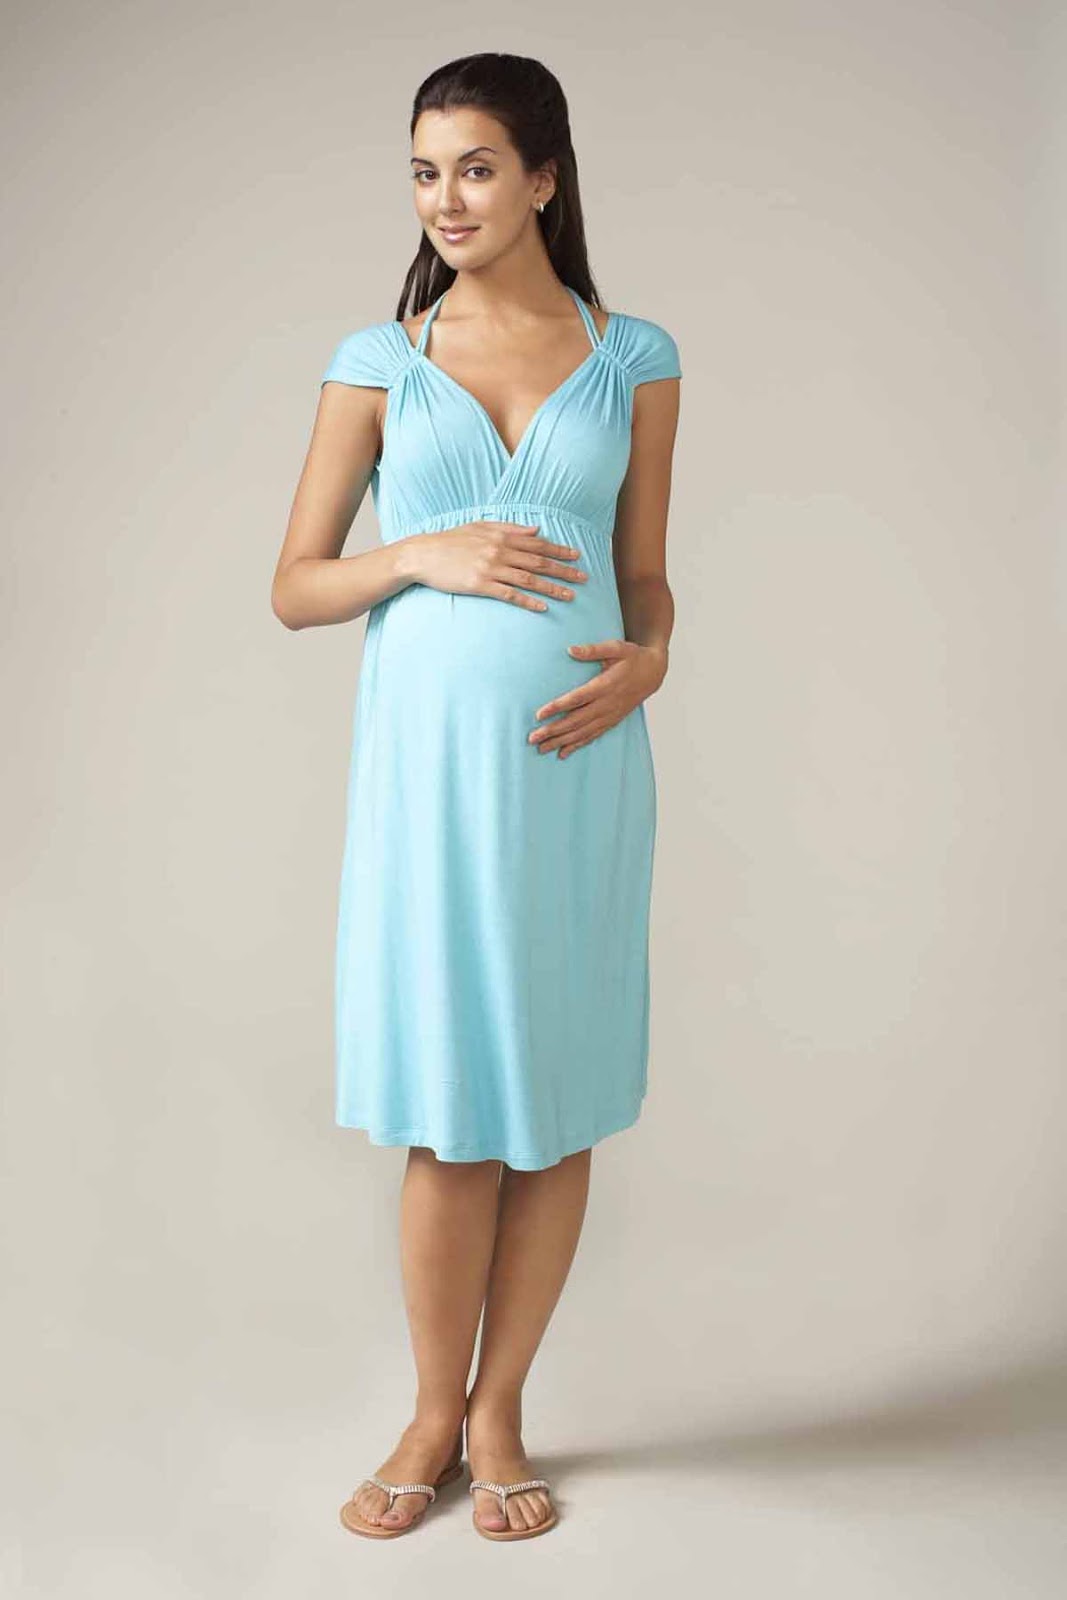 New Maternity Fashion - Fashion Trends - Latest Fashion News, Trends ...